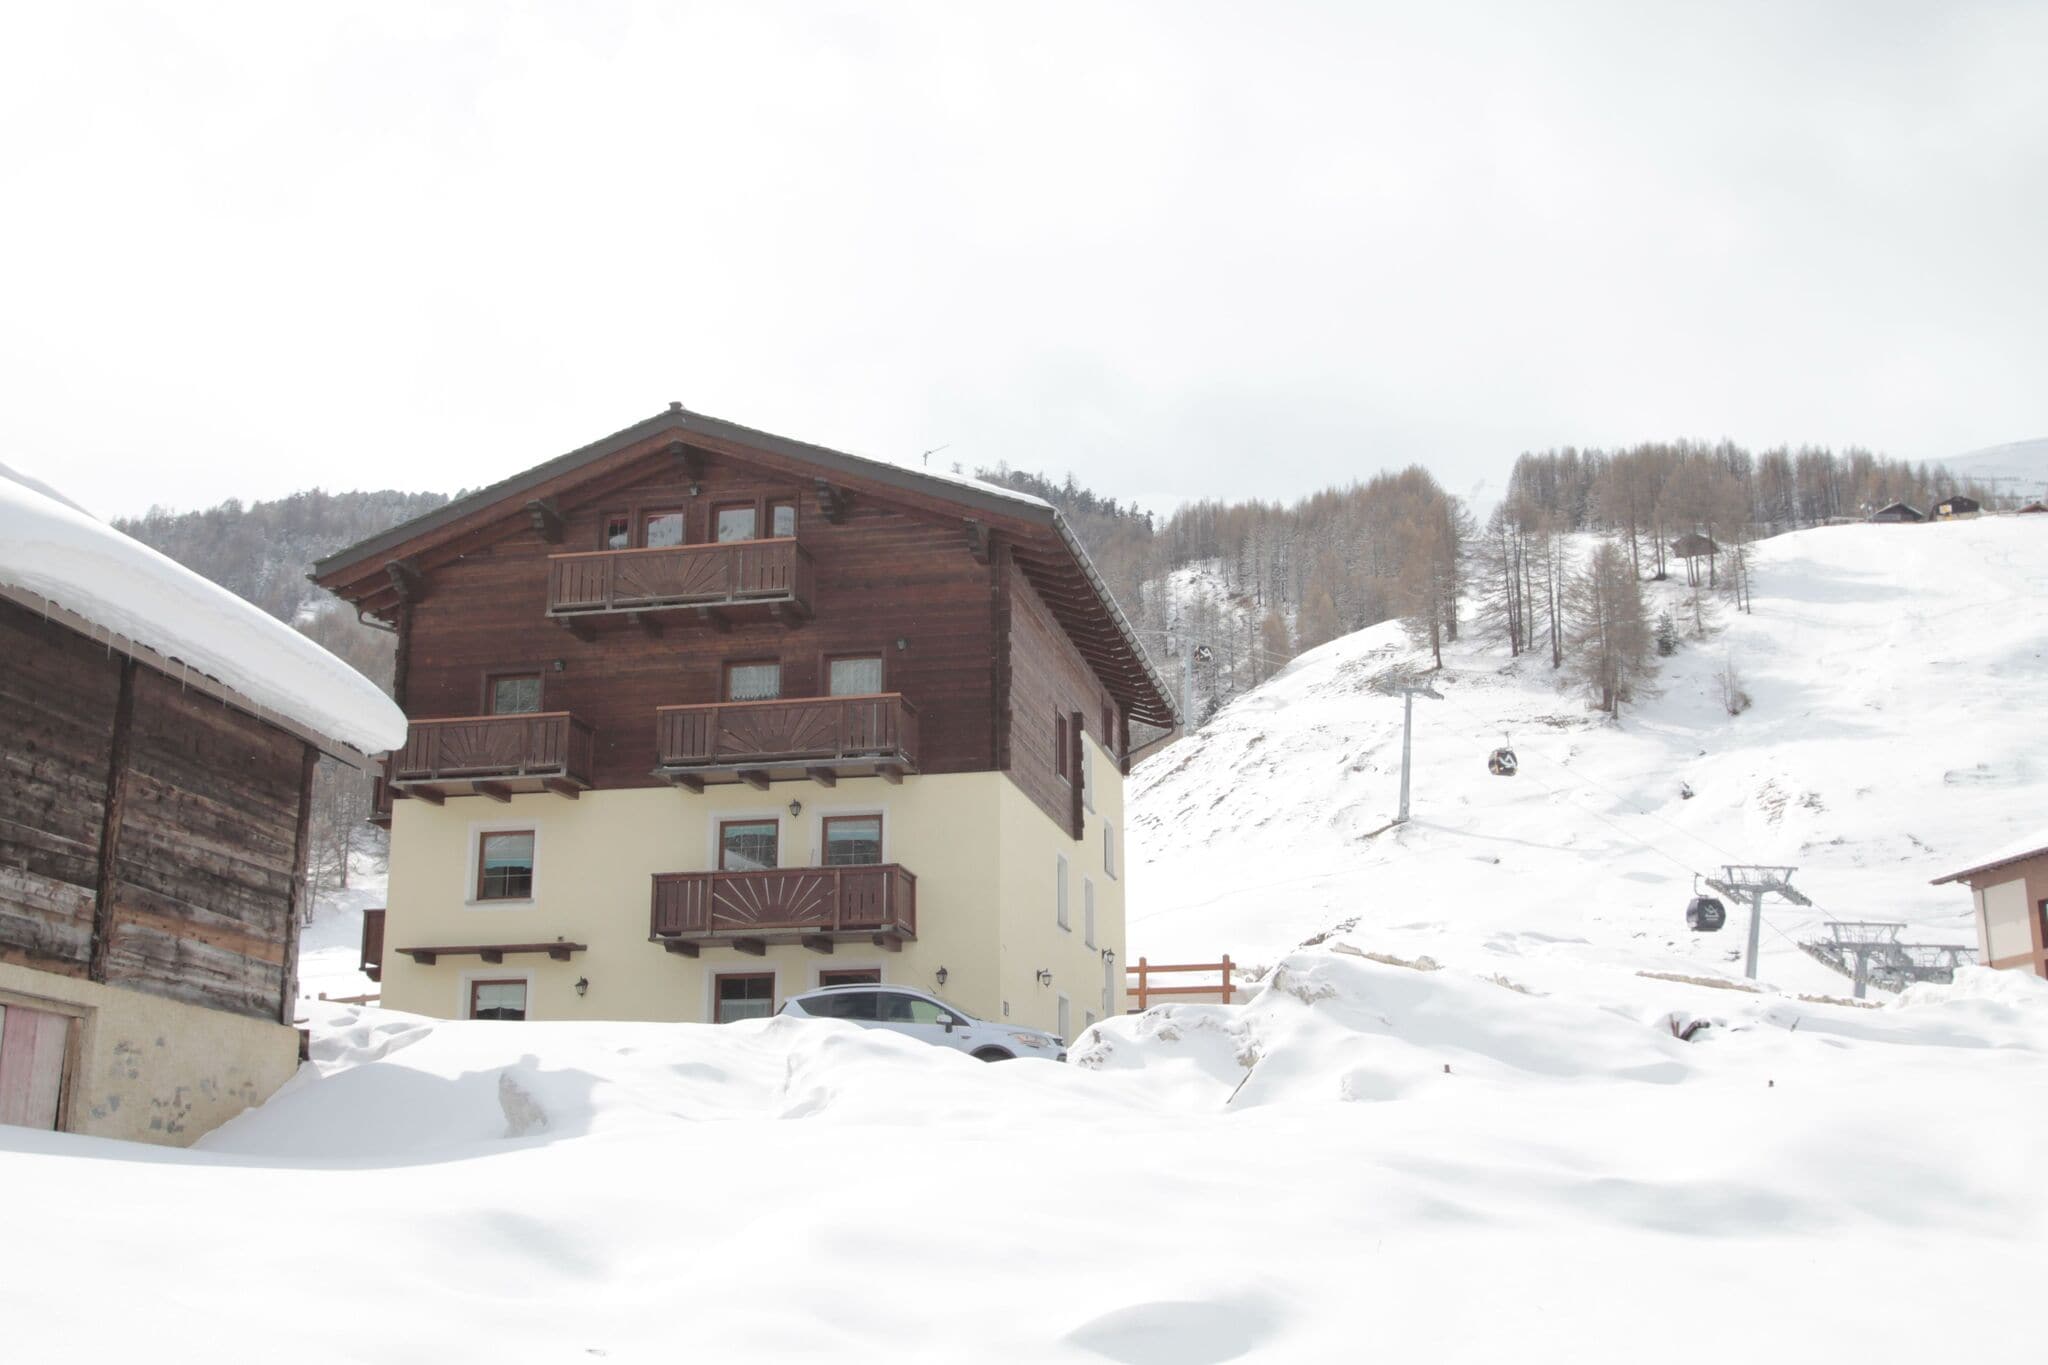 Luxuriöses Ferienhaus in Livigno, Italien nahe dem Skigebiet